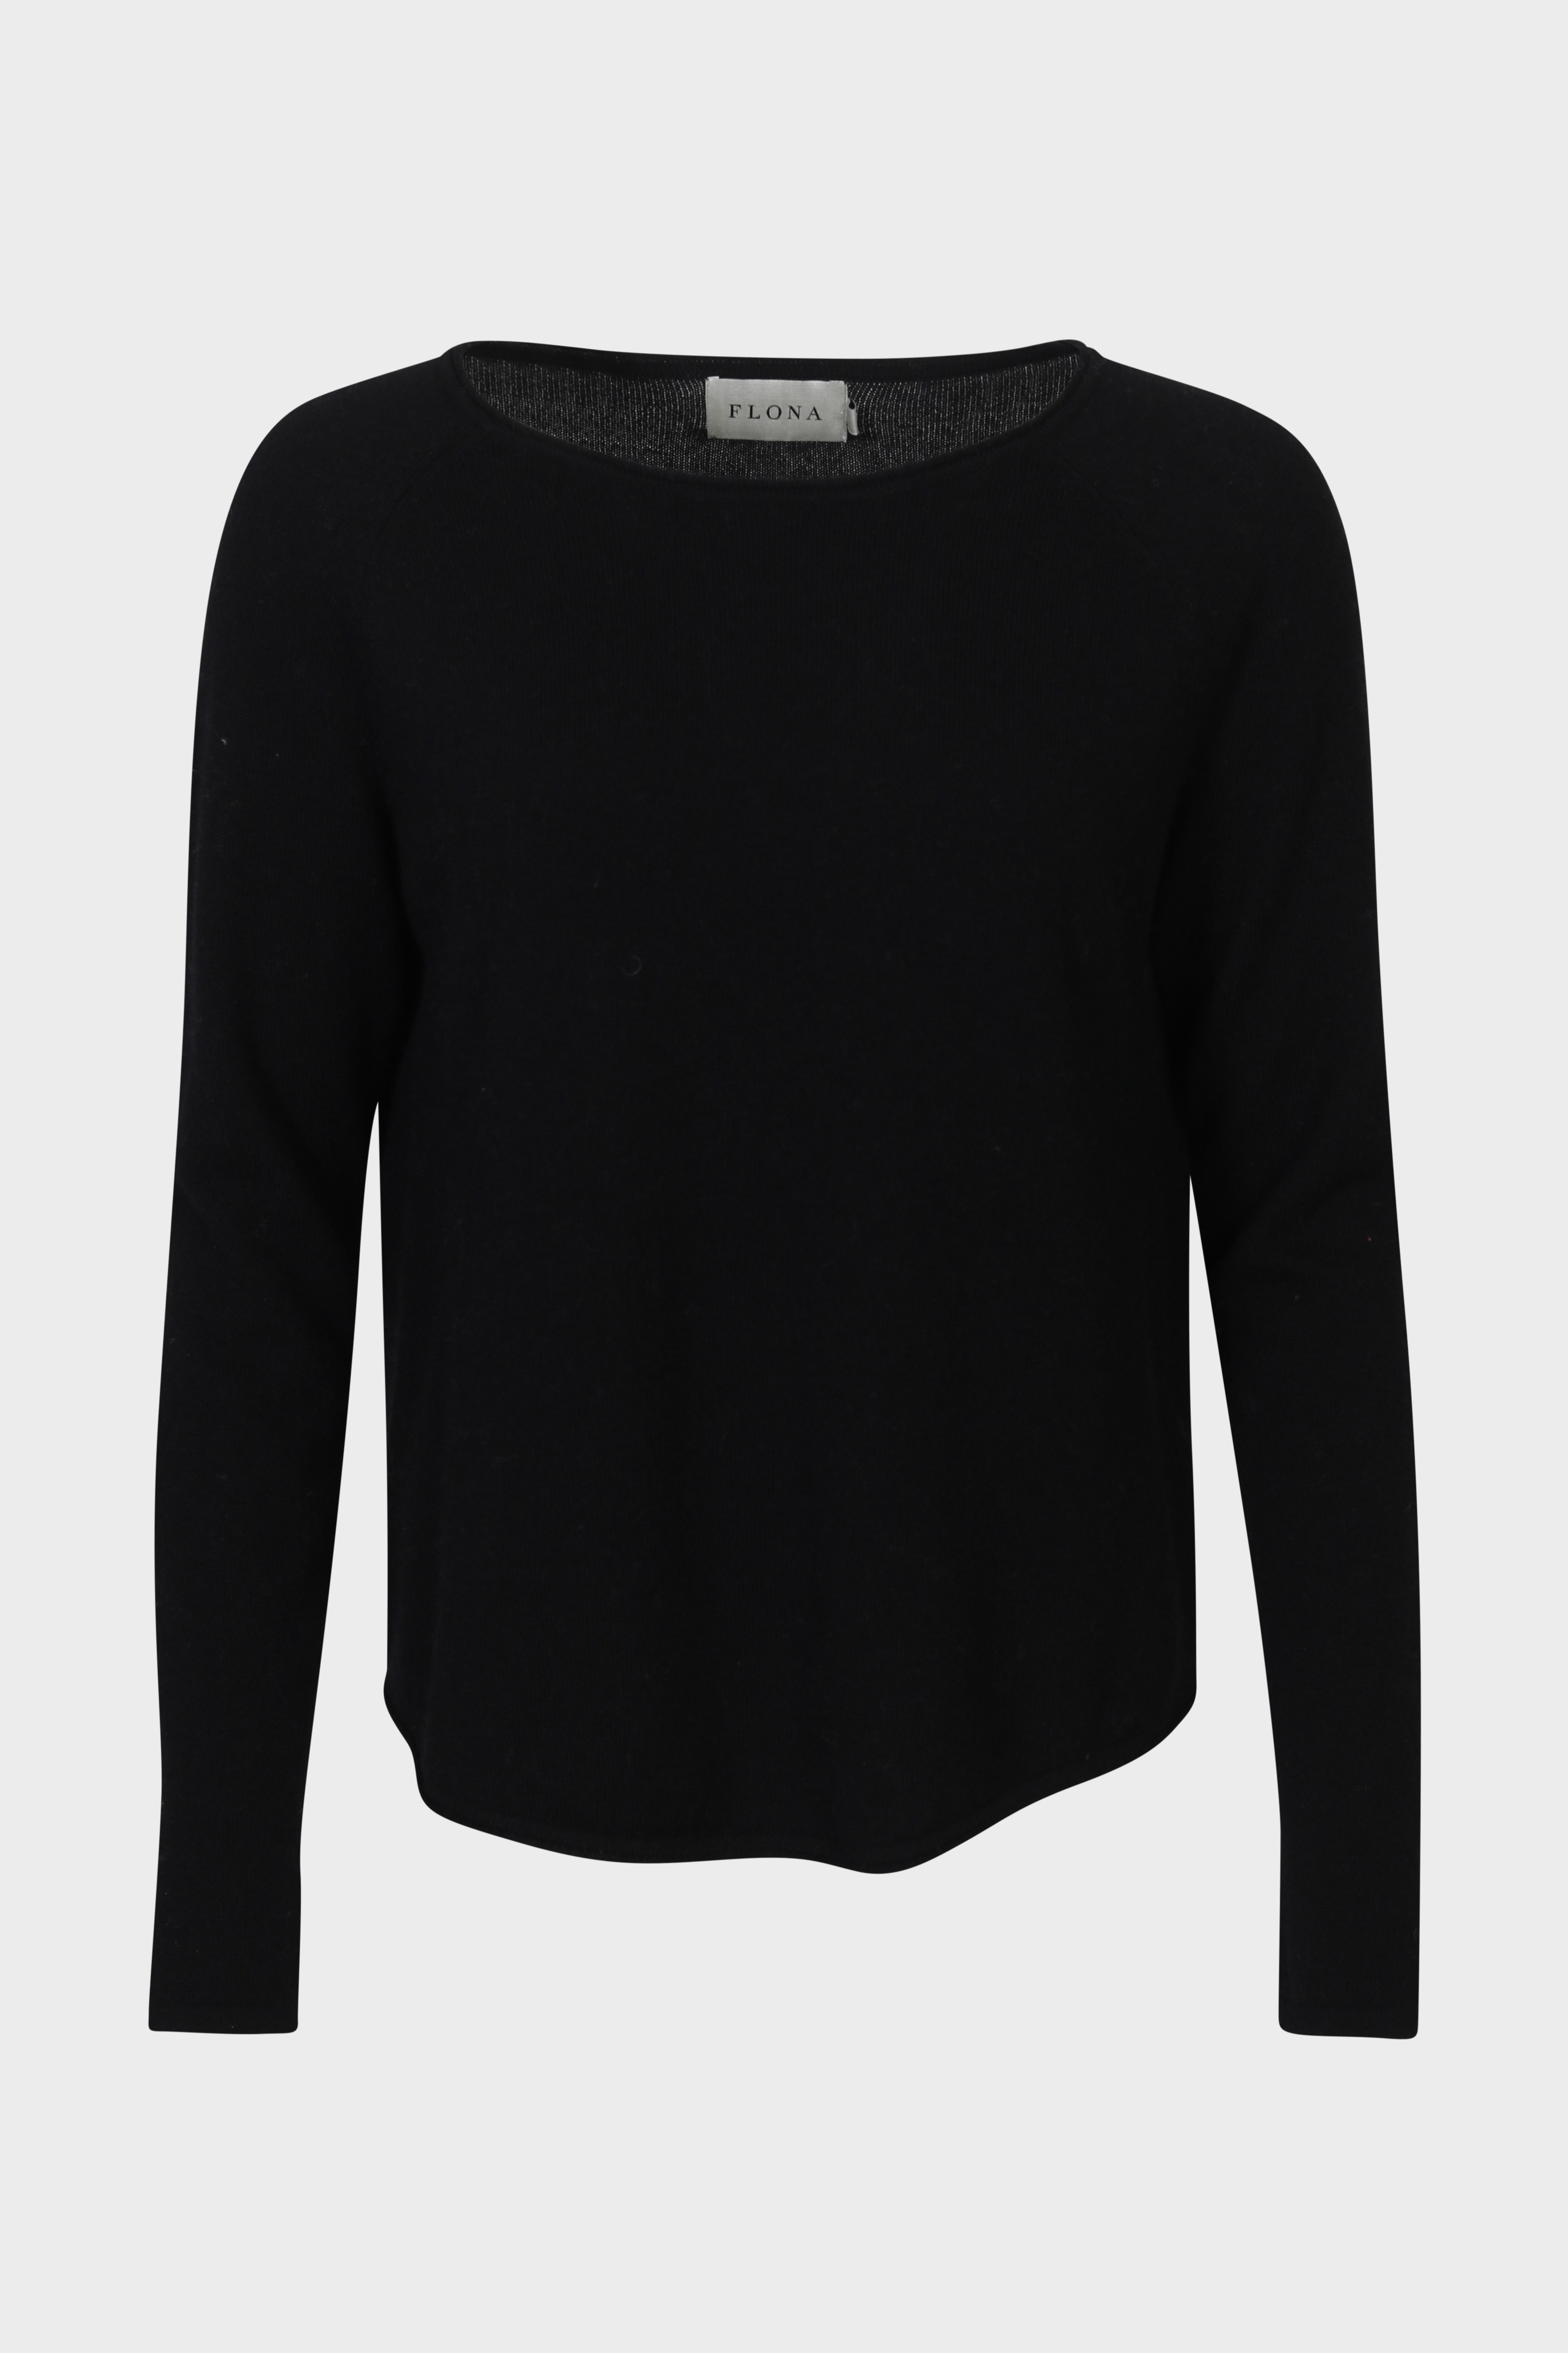 FLONA Cashmere Sweater in Black